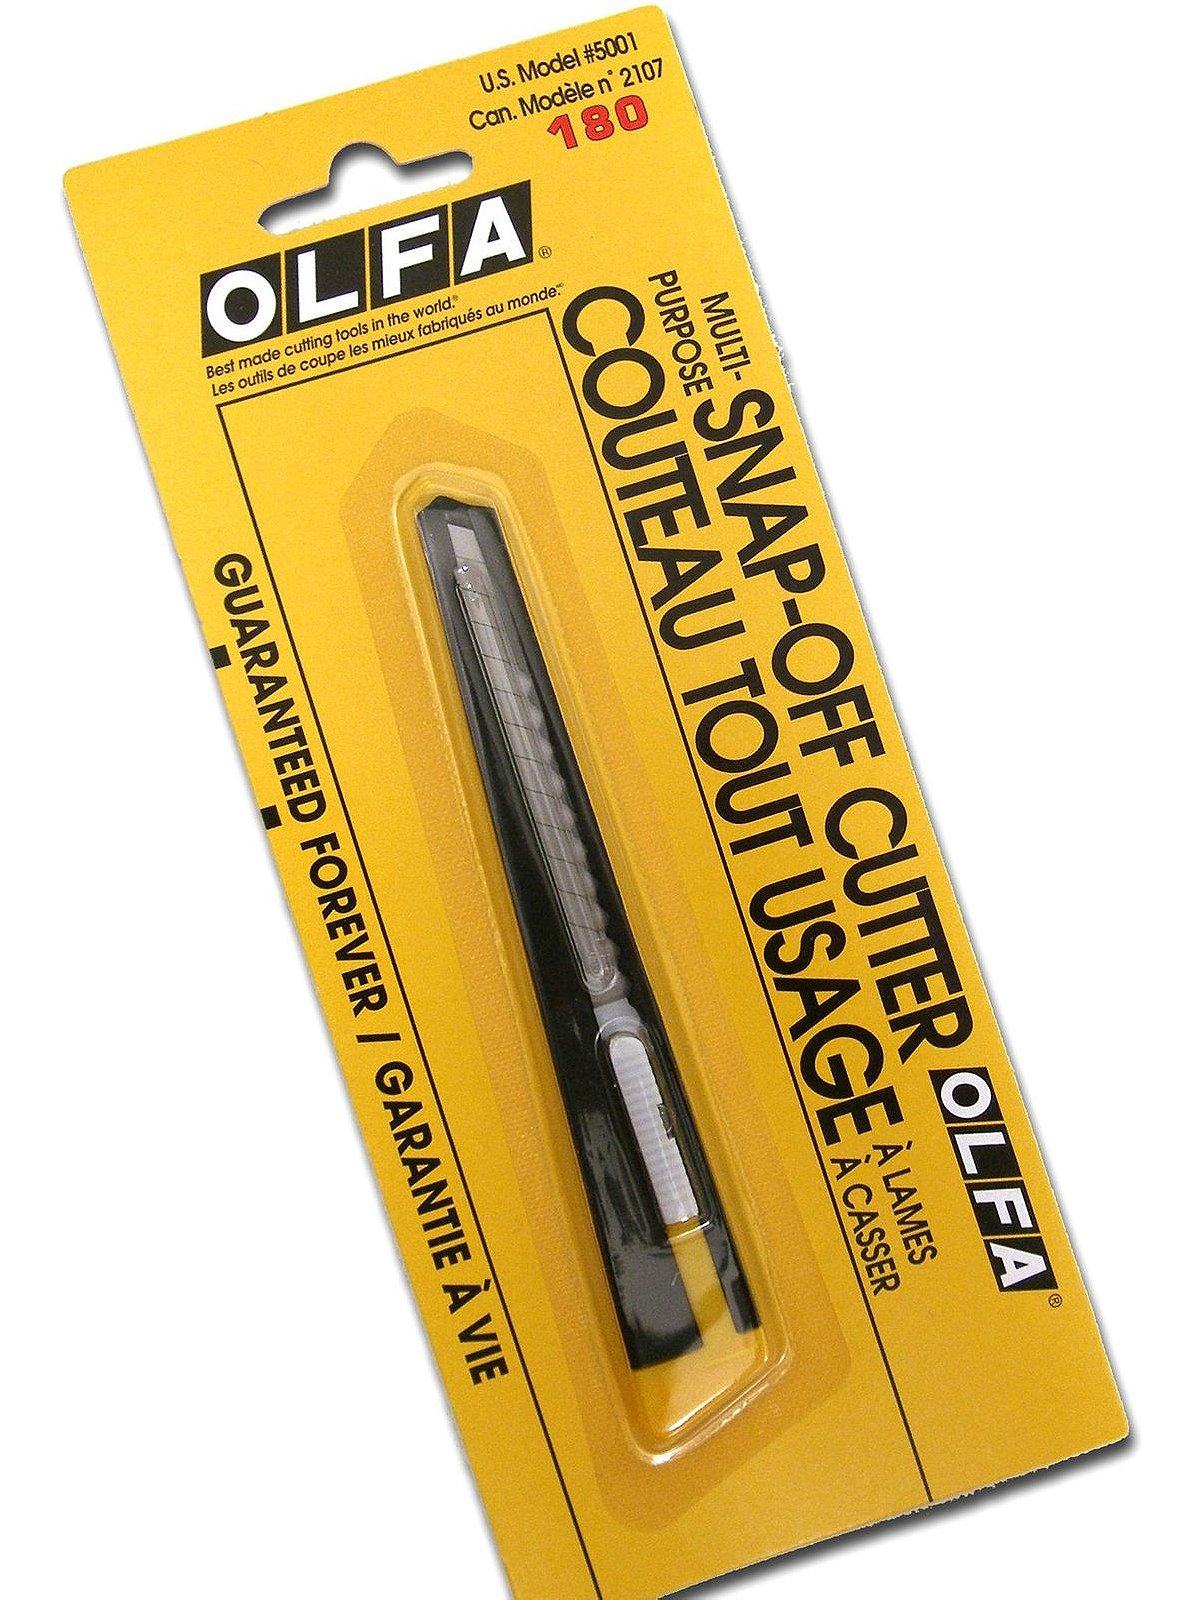 Olfa Snap-Off Blade Utility Knife